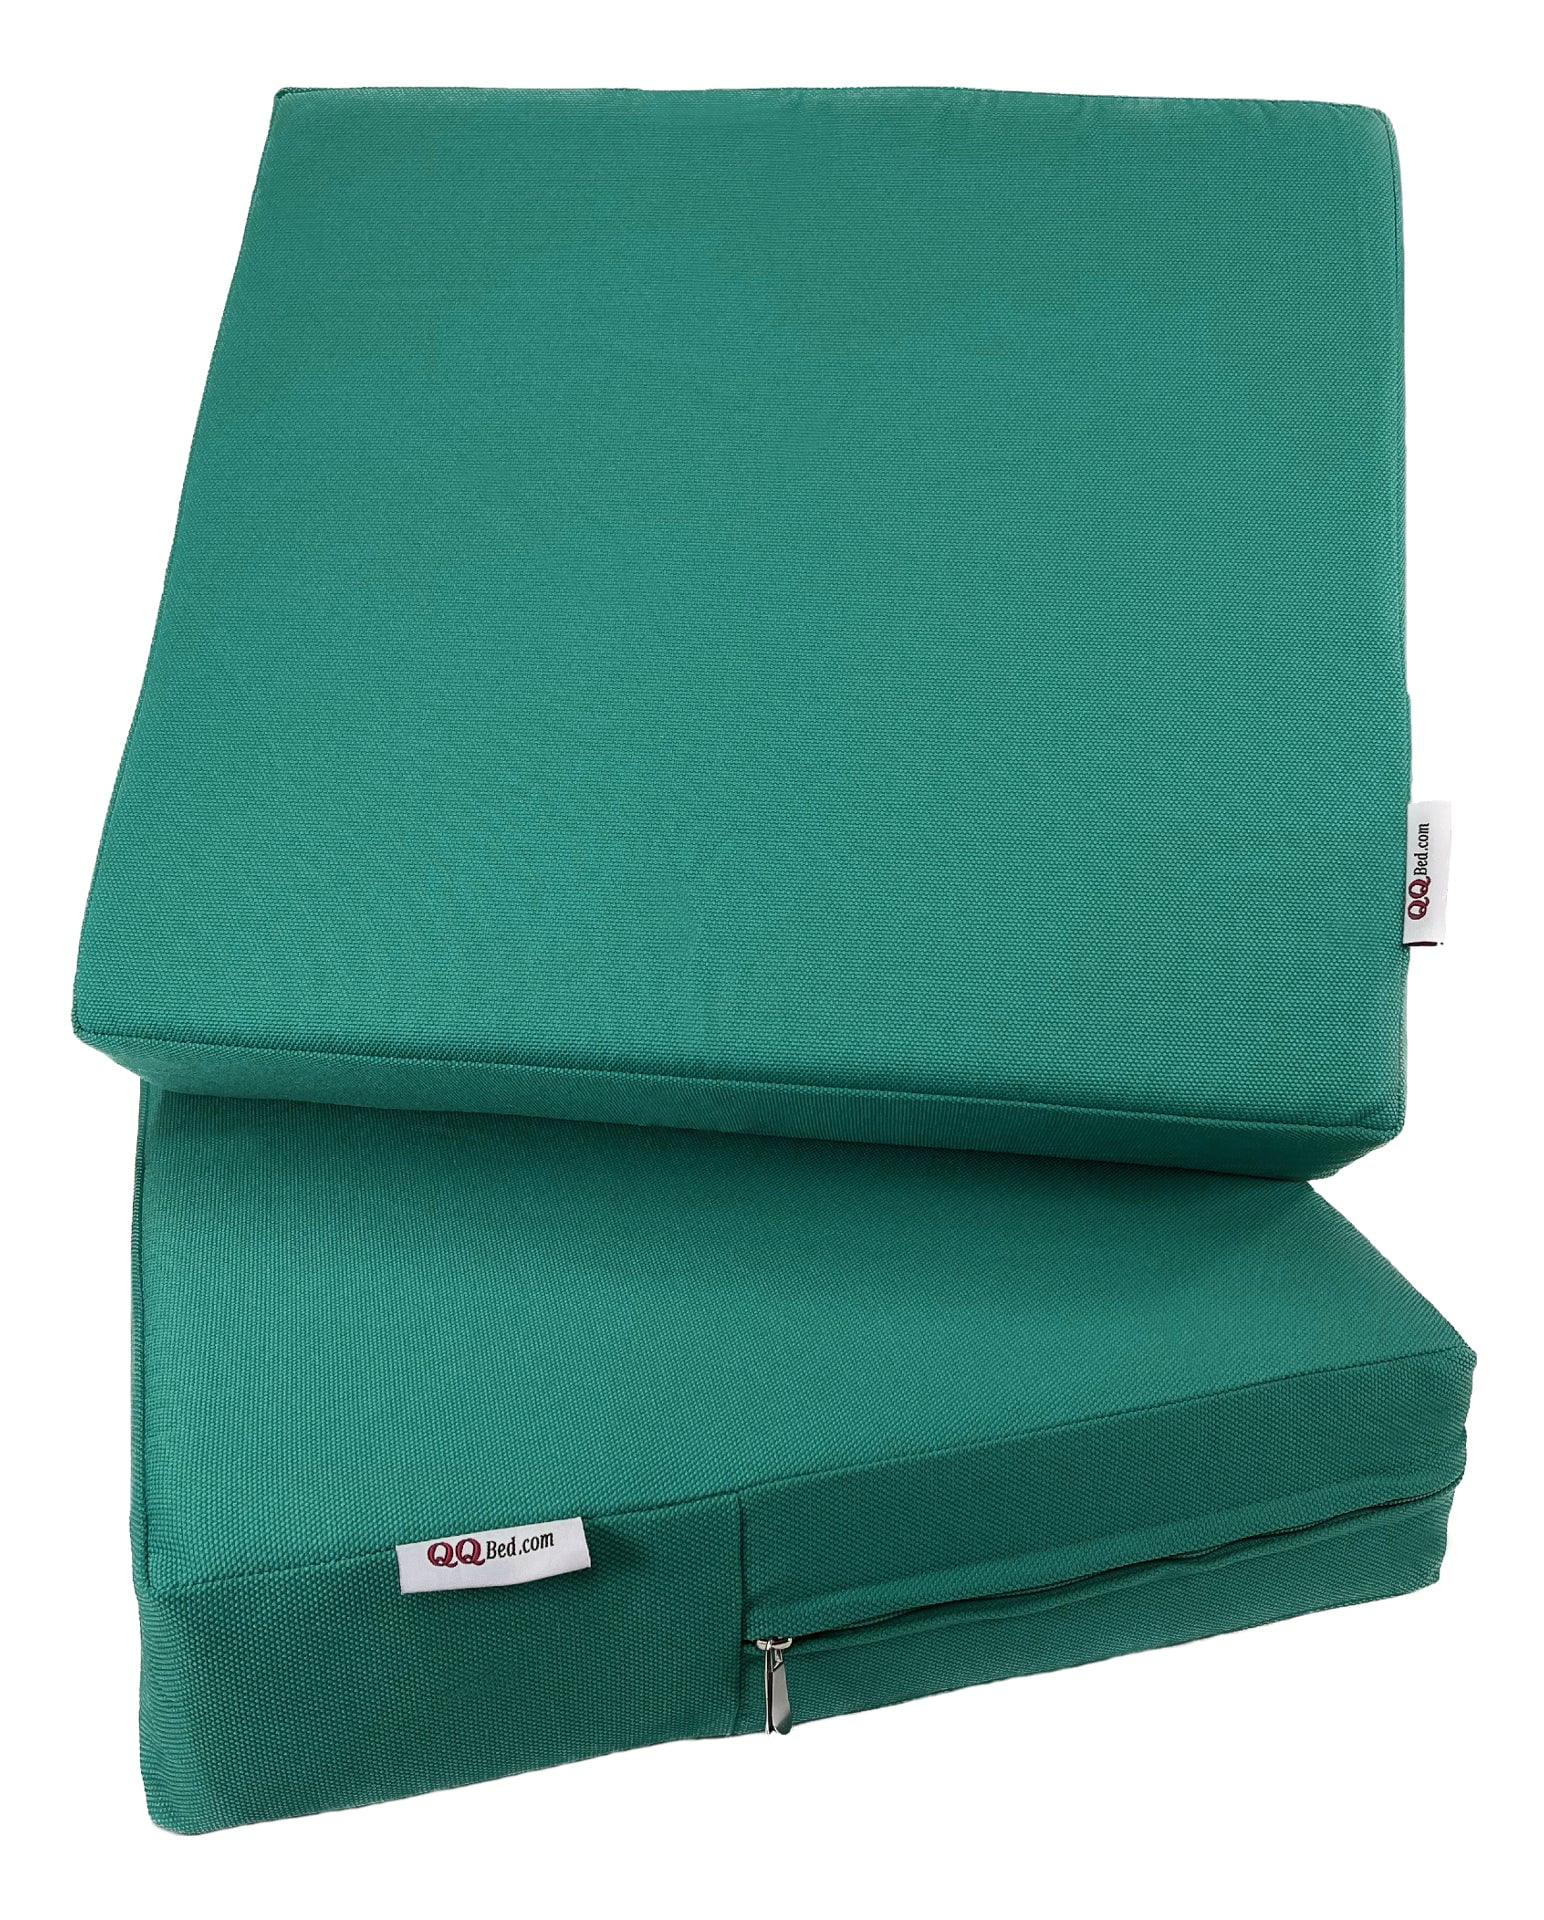 30x30x2 Fiber Foam Cushion | Patio & Marine Cushion Alternative 